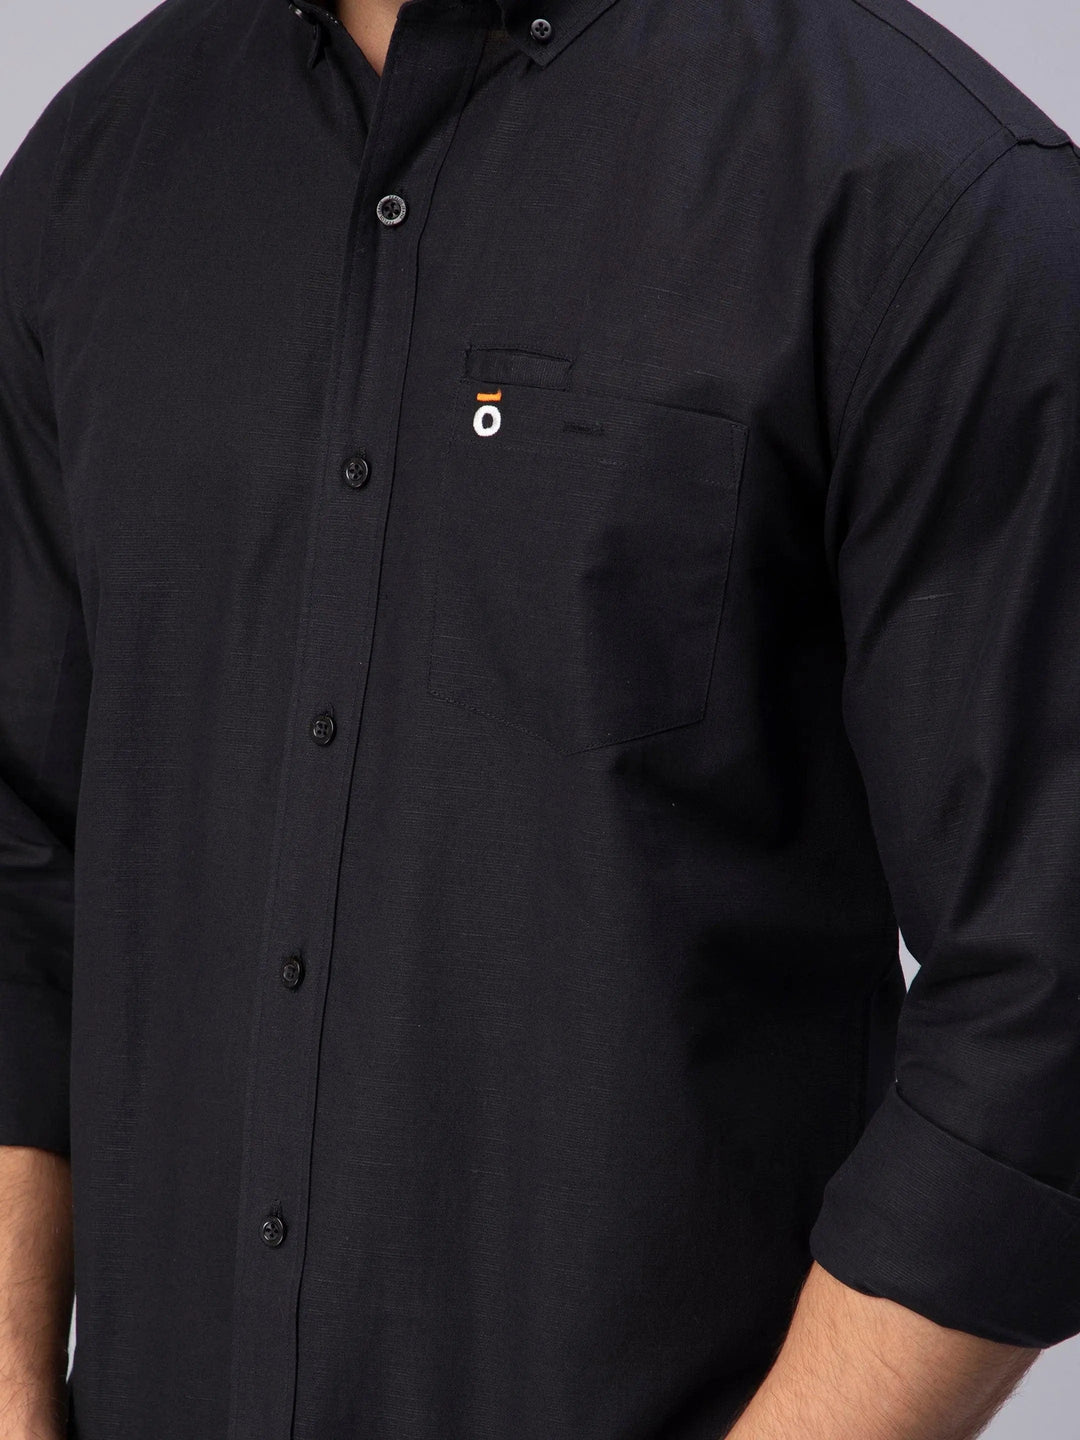 Peplos-Men's Black Regular Cotton Casual Shirt - Peplos Jeans 